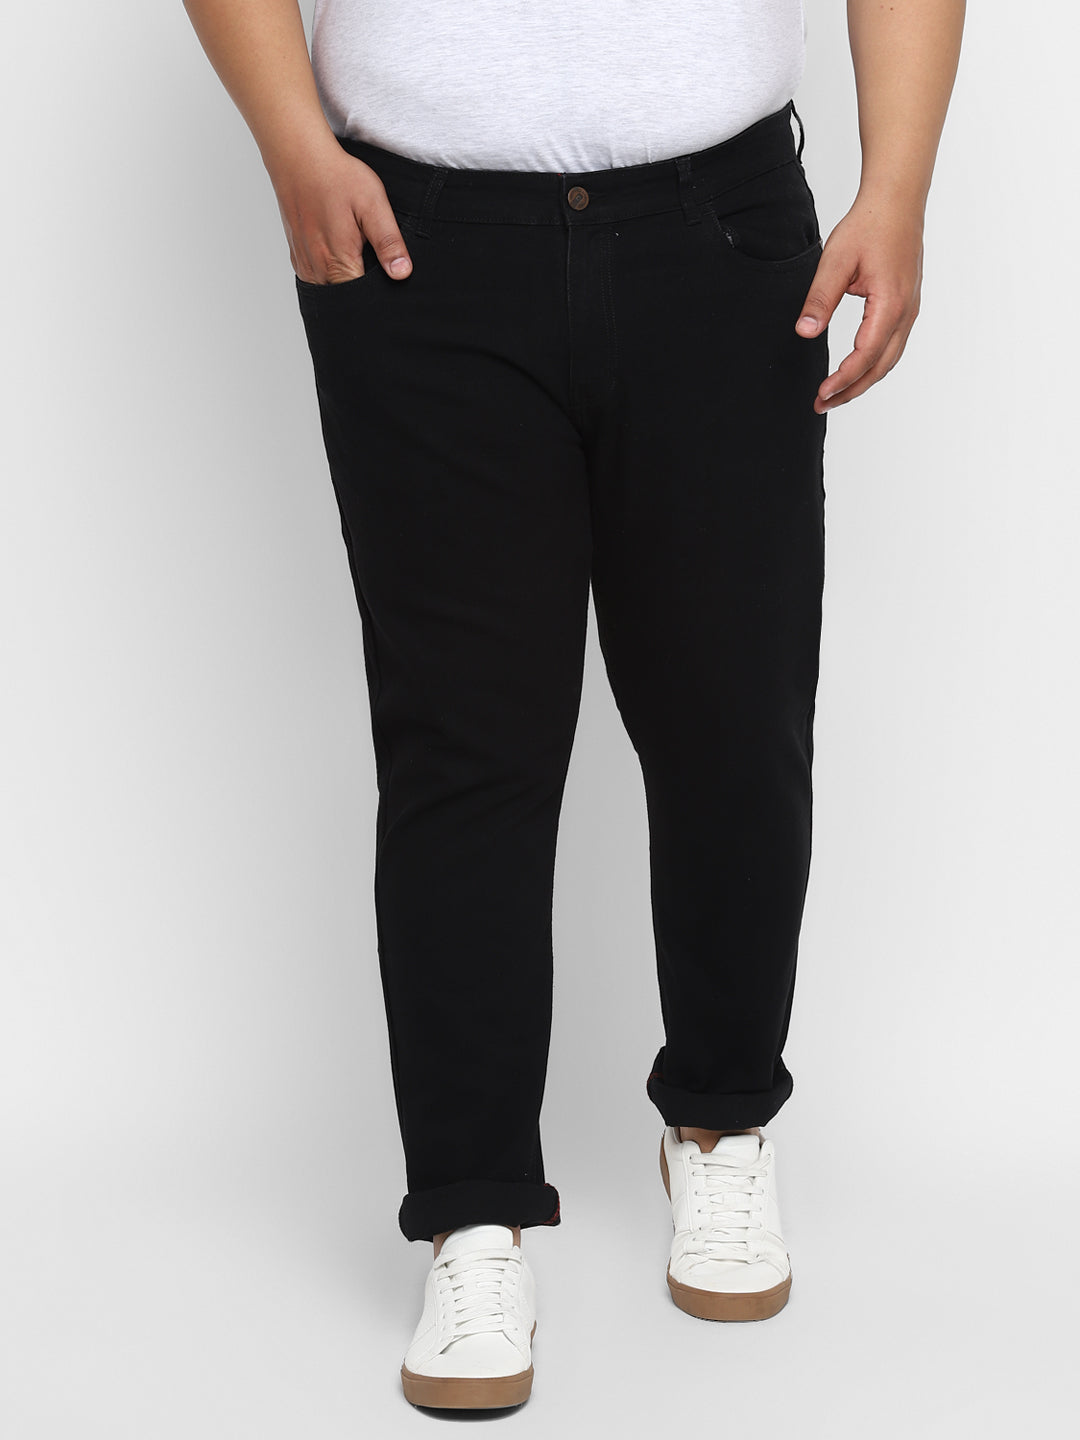 Urbano Plus Men's Black Regular Fit Denim Jeans Stretchable